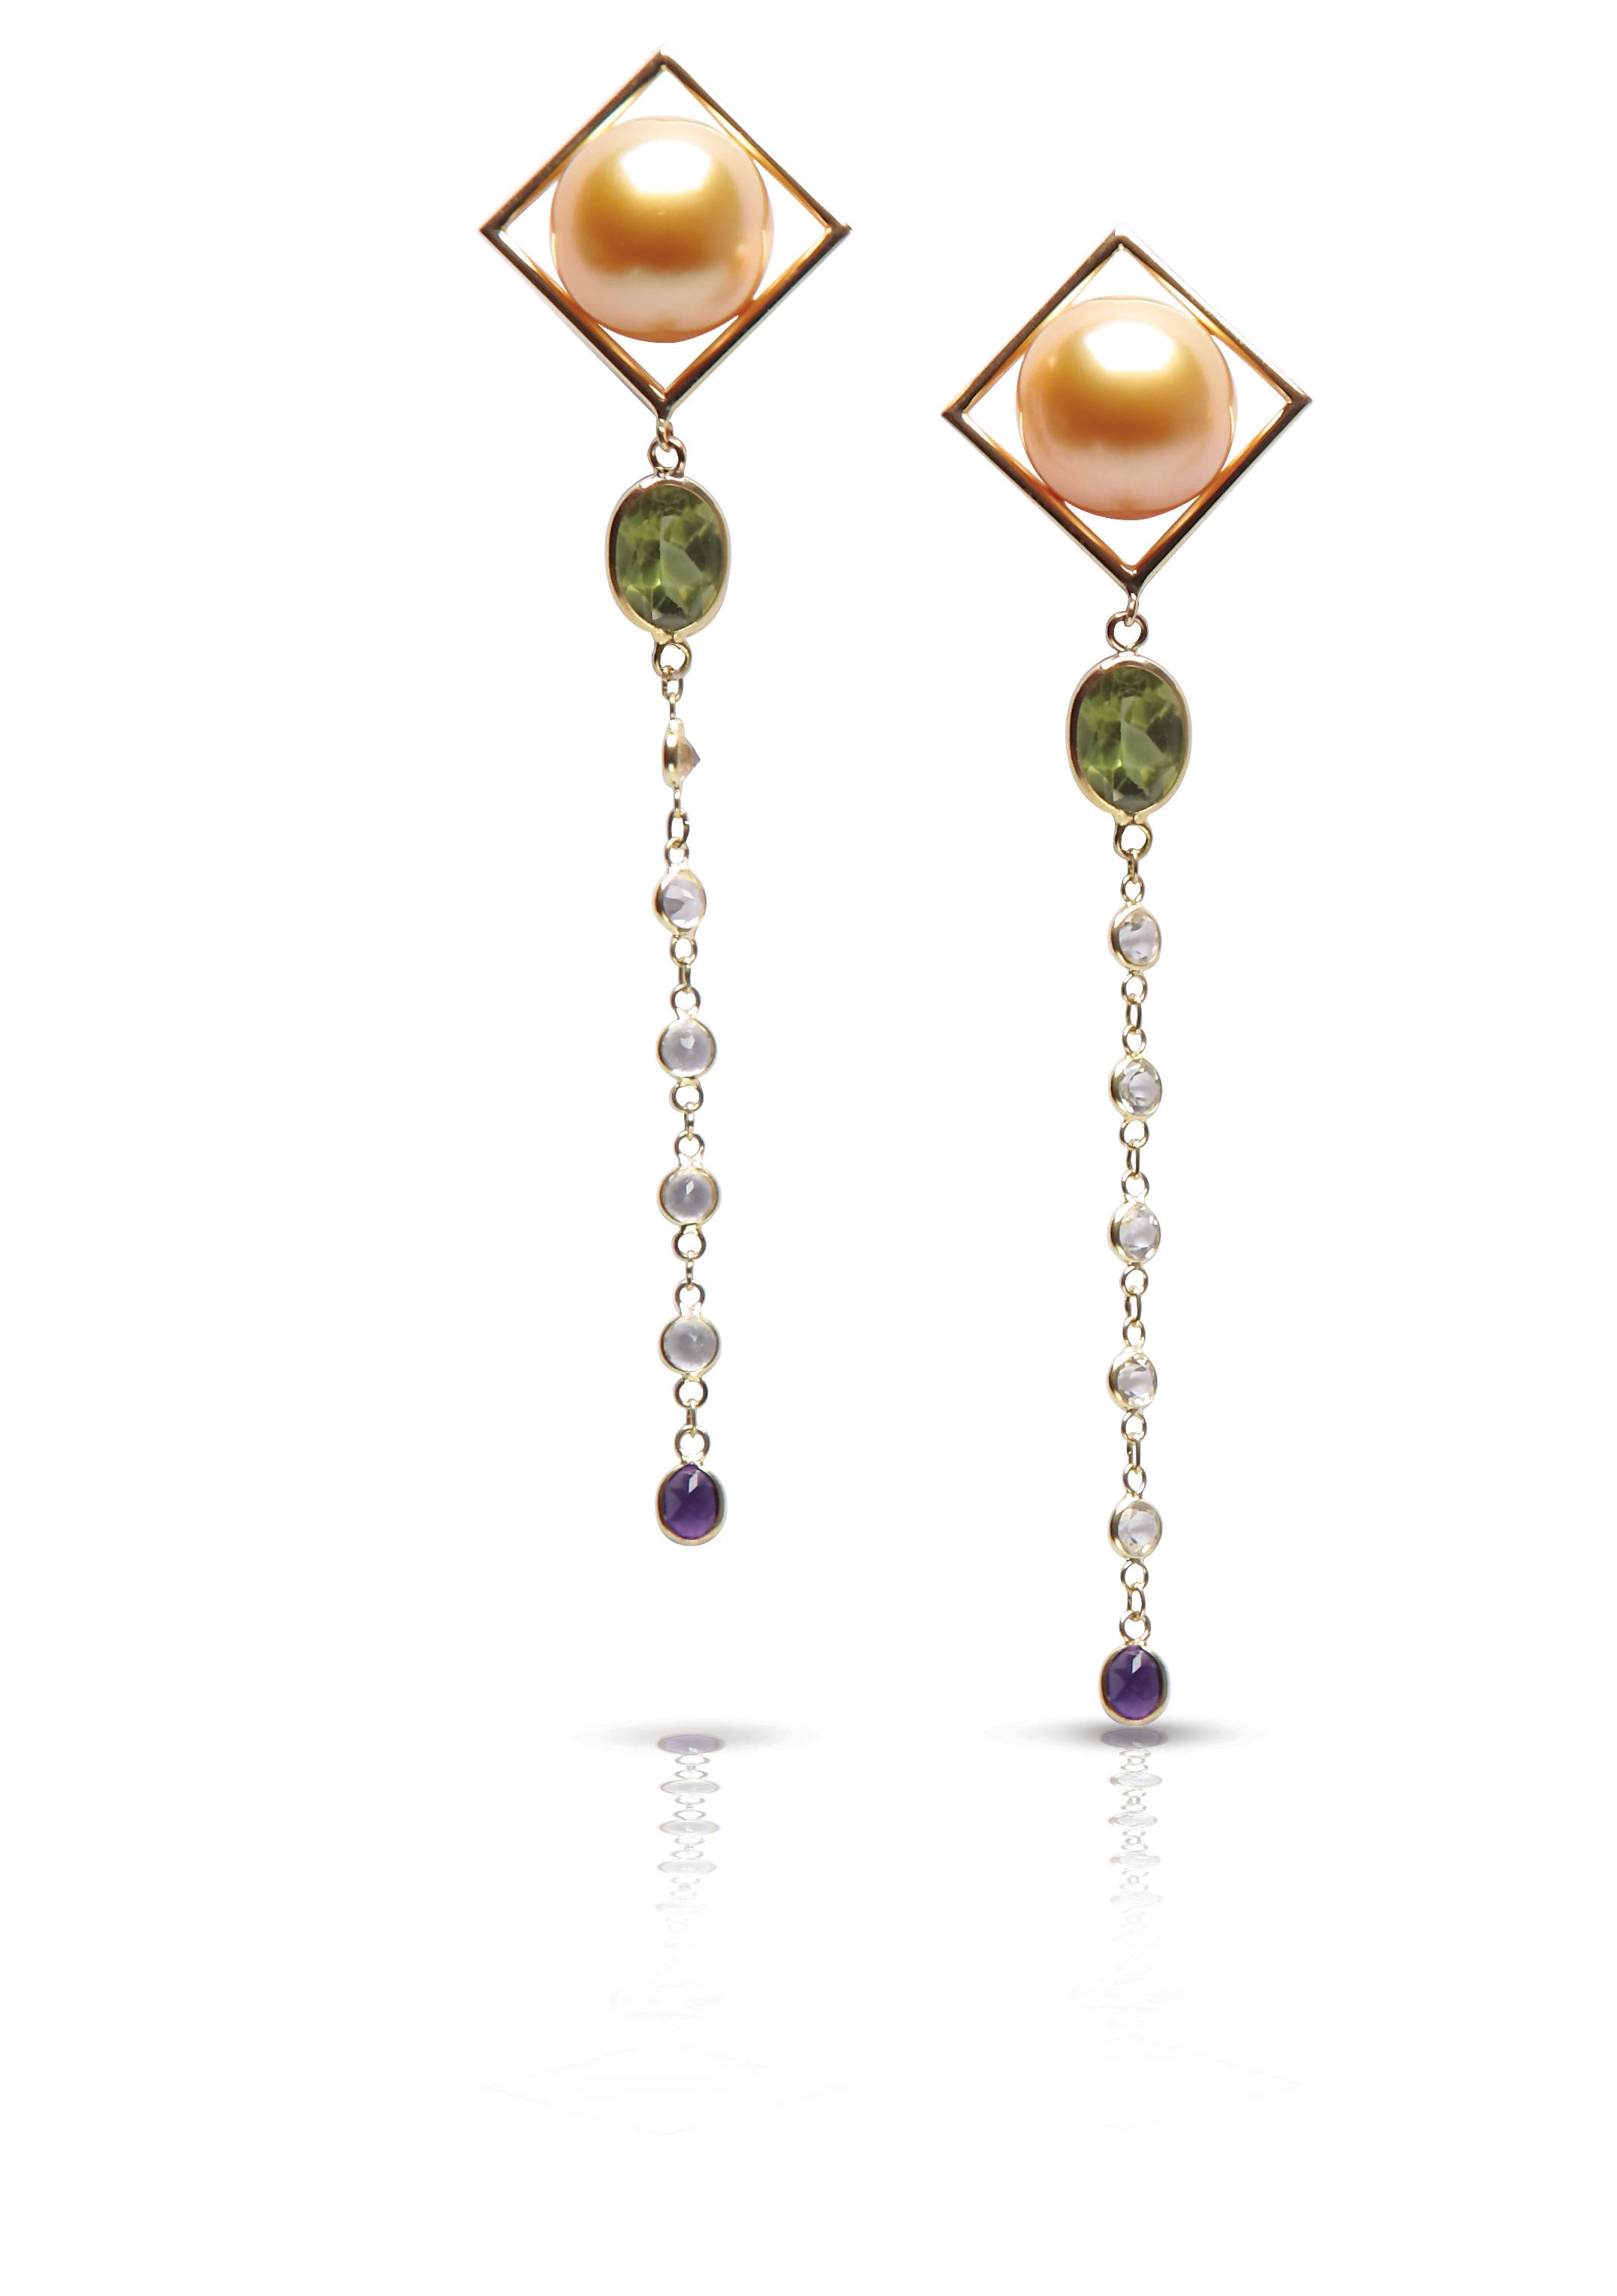 OPENER-Jewelmer-Tutti-Frutti-earrings-USE-THE-PAIR-ON-THE-LEFT-3_01 ...